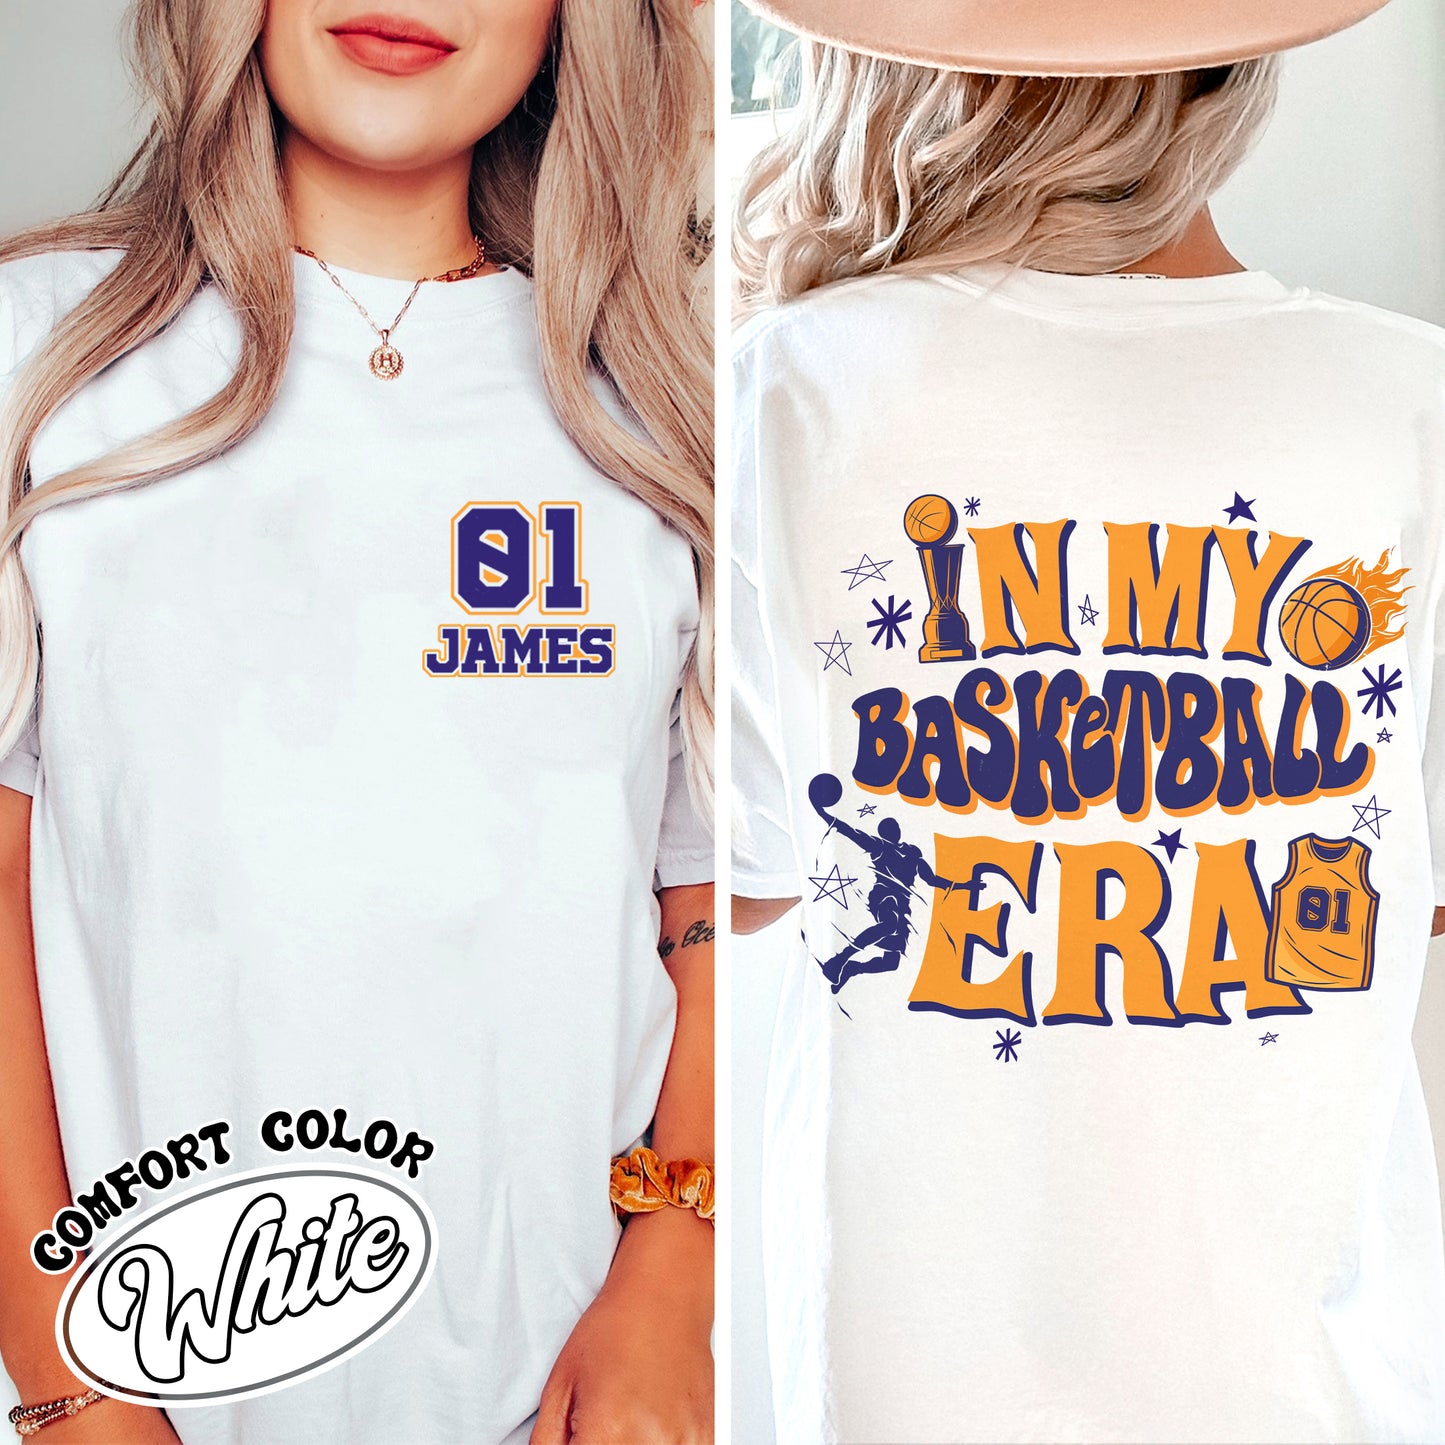 In My Basketball Mom Era Comfort Color Shirt, In My Basketball Mom Era Shirt, Custom In My Basketball Mom Era Shirt, In My Basketball Era, Basketball Shirt